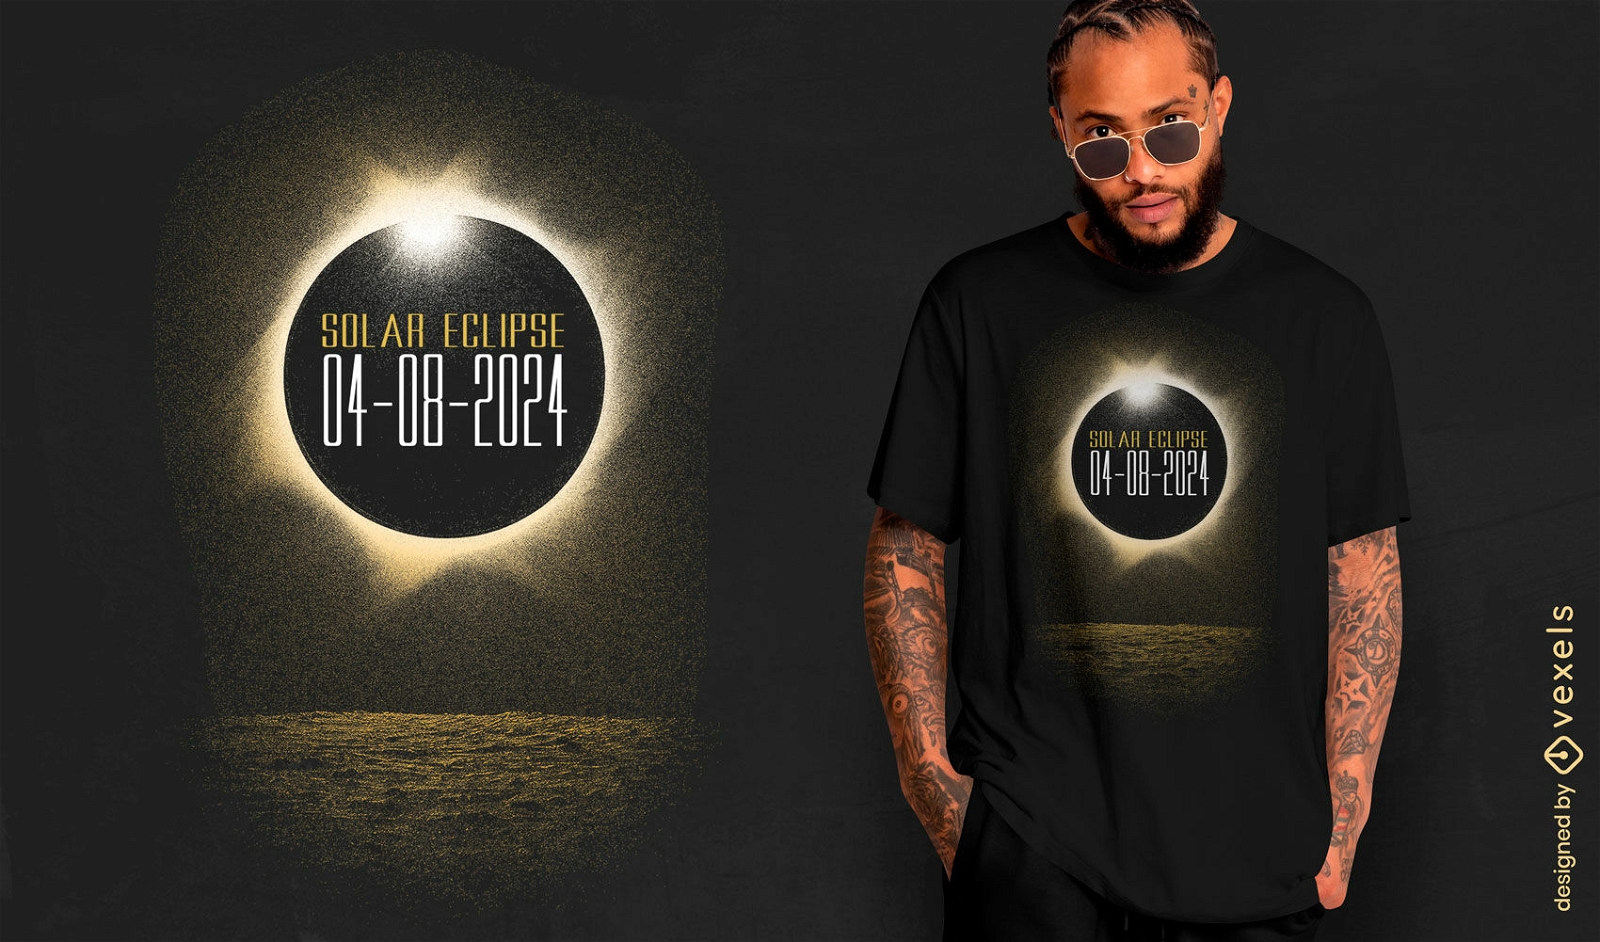 Solar eclipse event t-shirt design